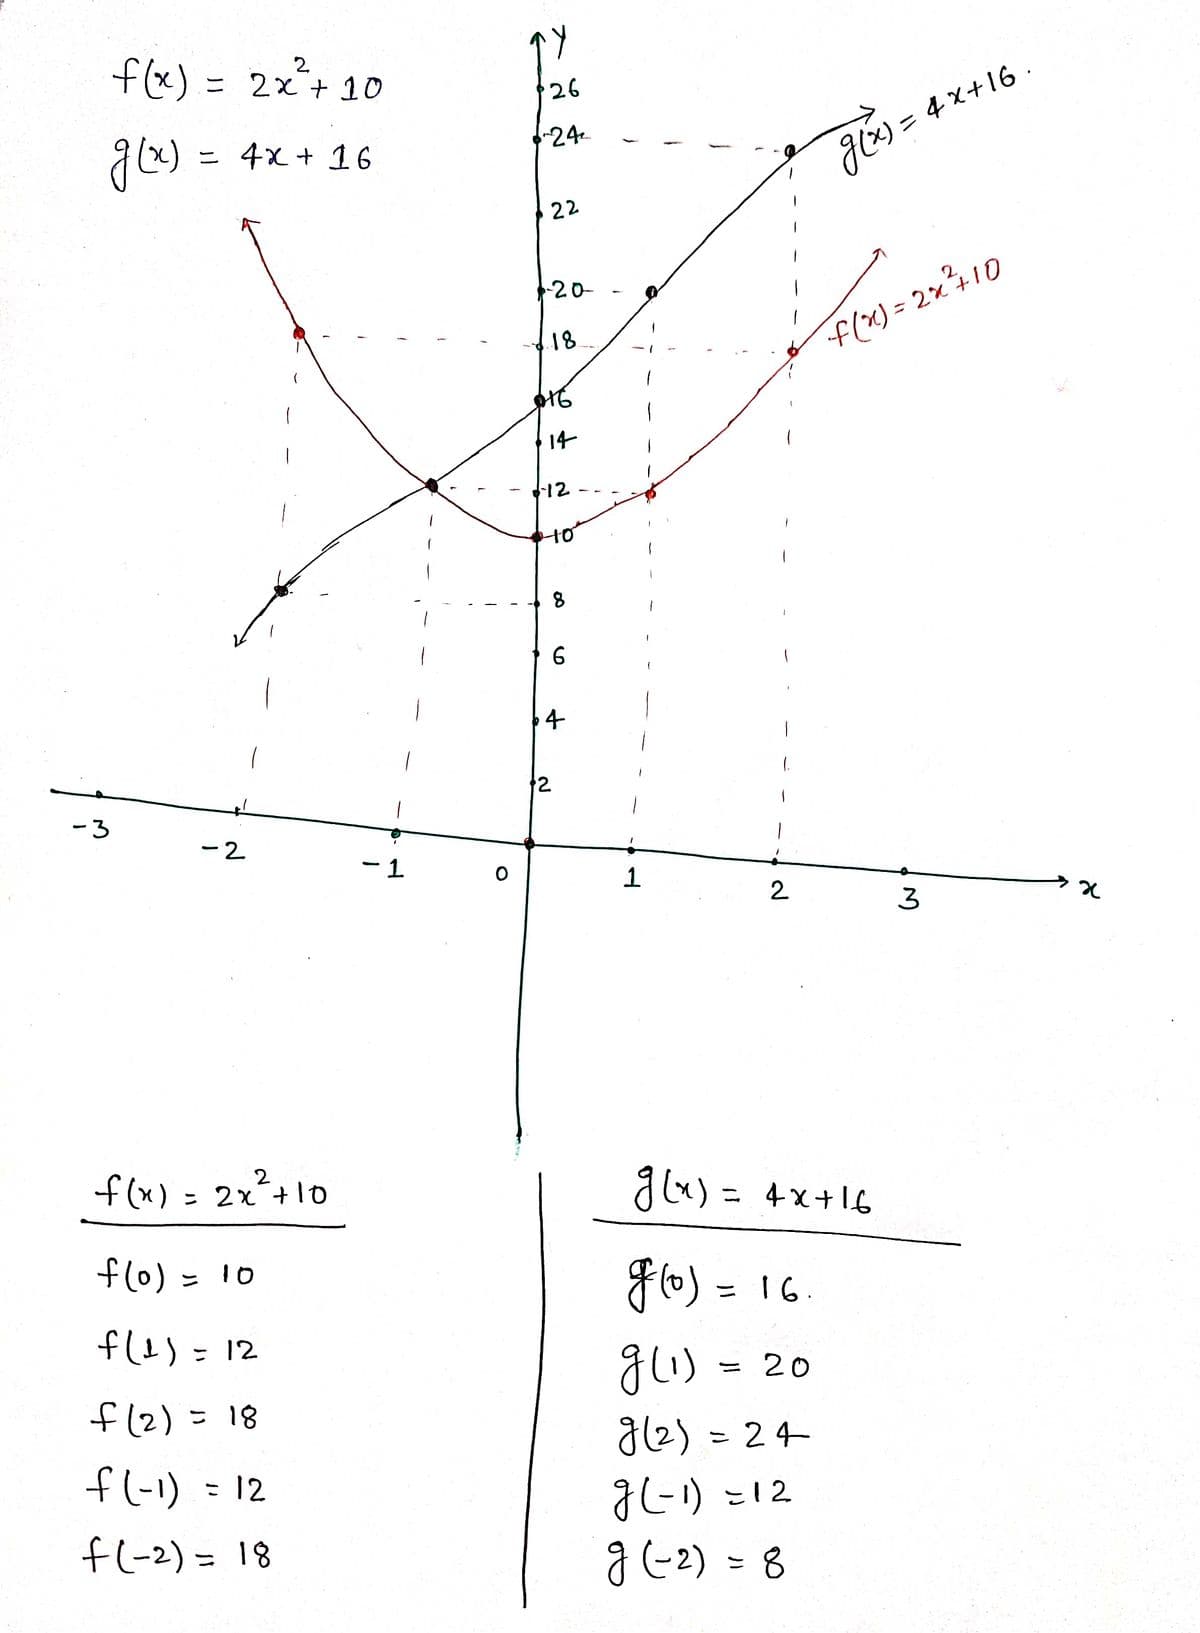 flx)
= 2x + 10
26
) = 4x + 16
ニ 4x+ 16
-24
Jlx) = 4 x+16 .
22
ト20-
18
f(x)= 2x410
14
4
12
ー3
ー2
ー1
2
3
f(x) = 2x+10
glx) = 4x+16
flo) = 10
F6) = 16.
%3D
fle) = 12
g1) = 20
f(2) = 18
9/2) = 24
fl-1)
- 12
JCり =12
f(-2) = 18
g (2) = 8
